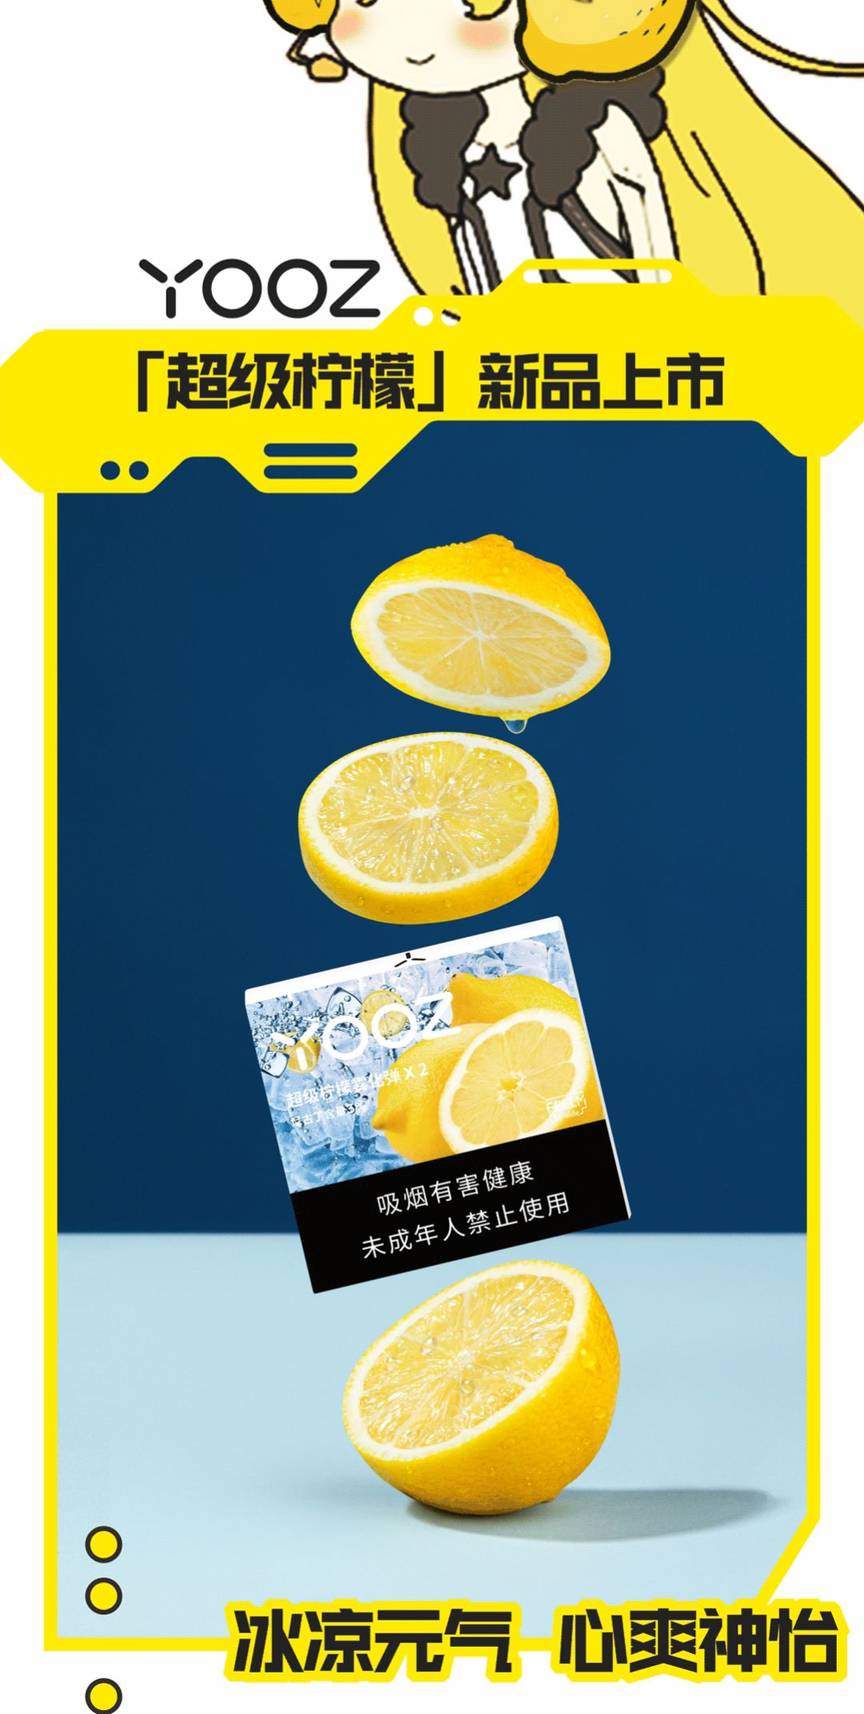 YOOZ柚子 | 全新口味上线，超级柠檬来袭-文章实验基地